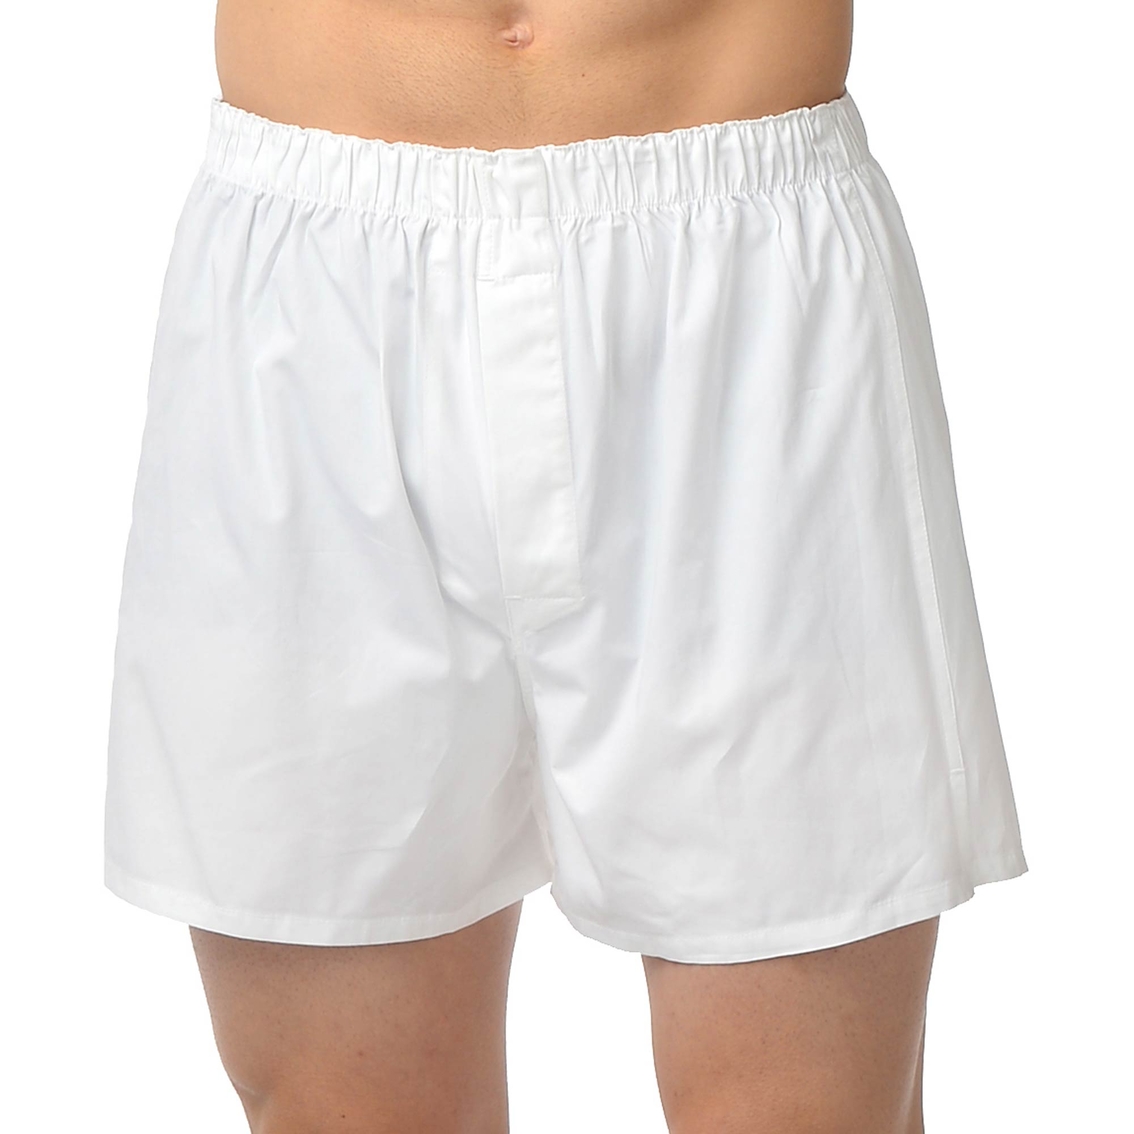 Majestic International Cotton Boxer Shorts | Underwear | Clothing ...